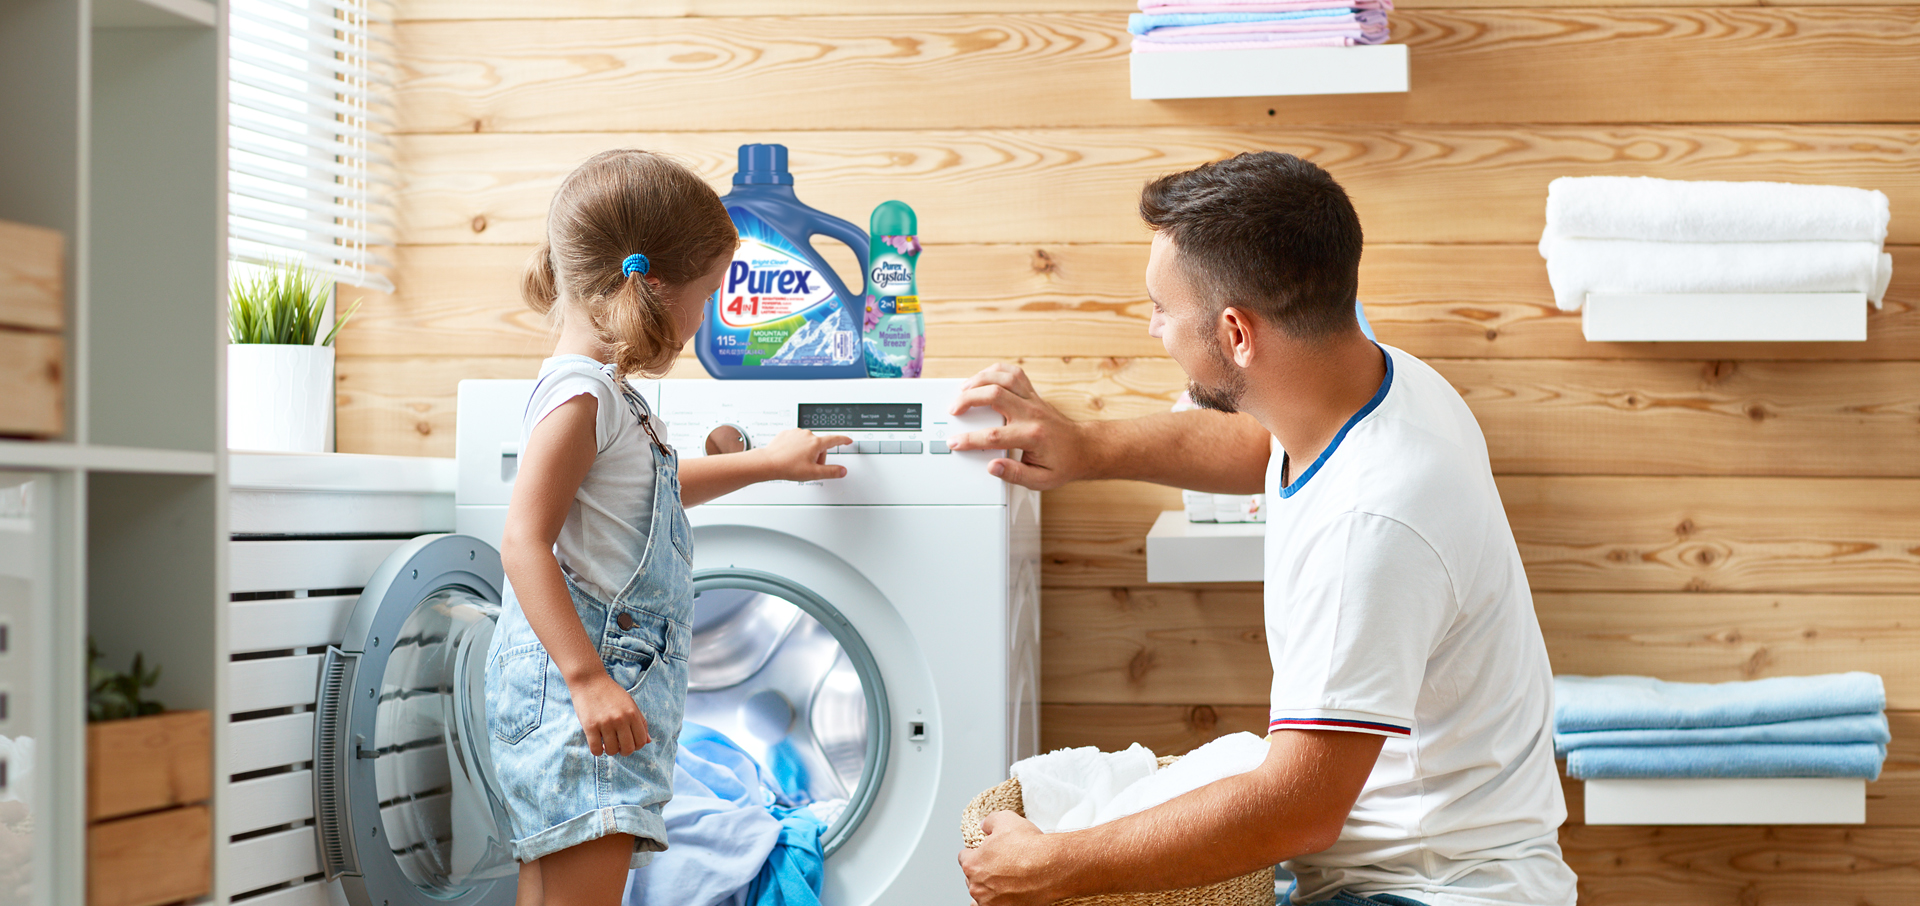 Purex Laundry Detergent Household Lifestyle design